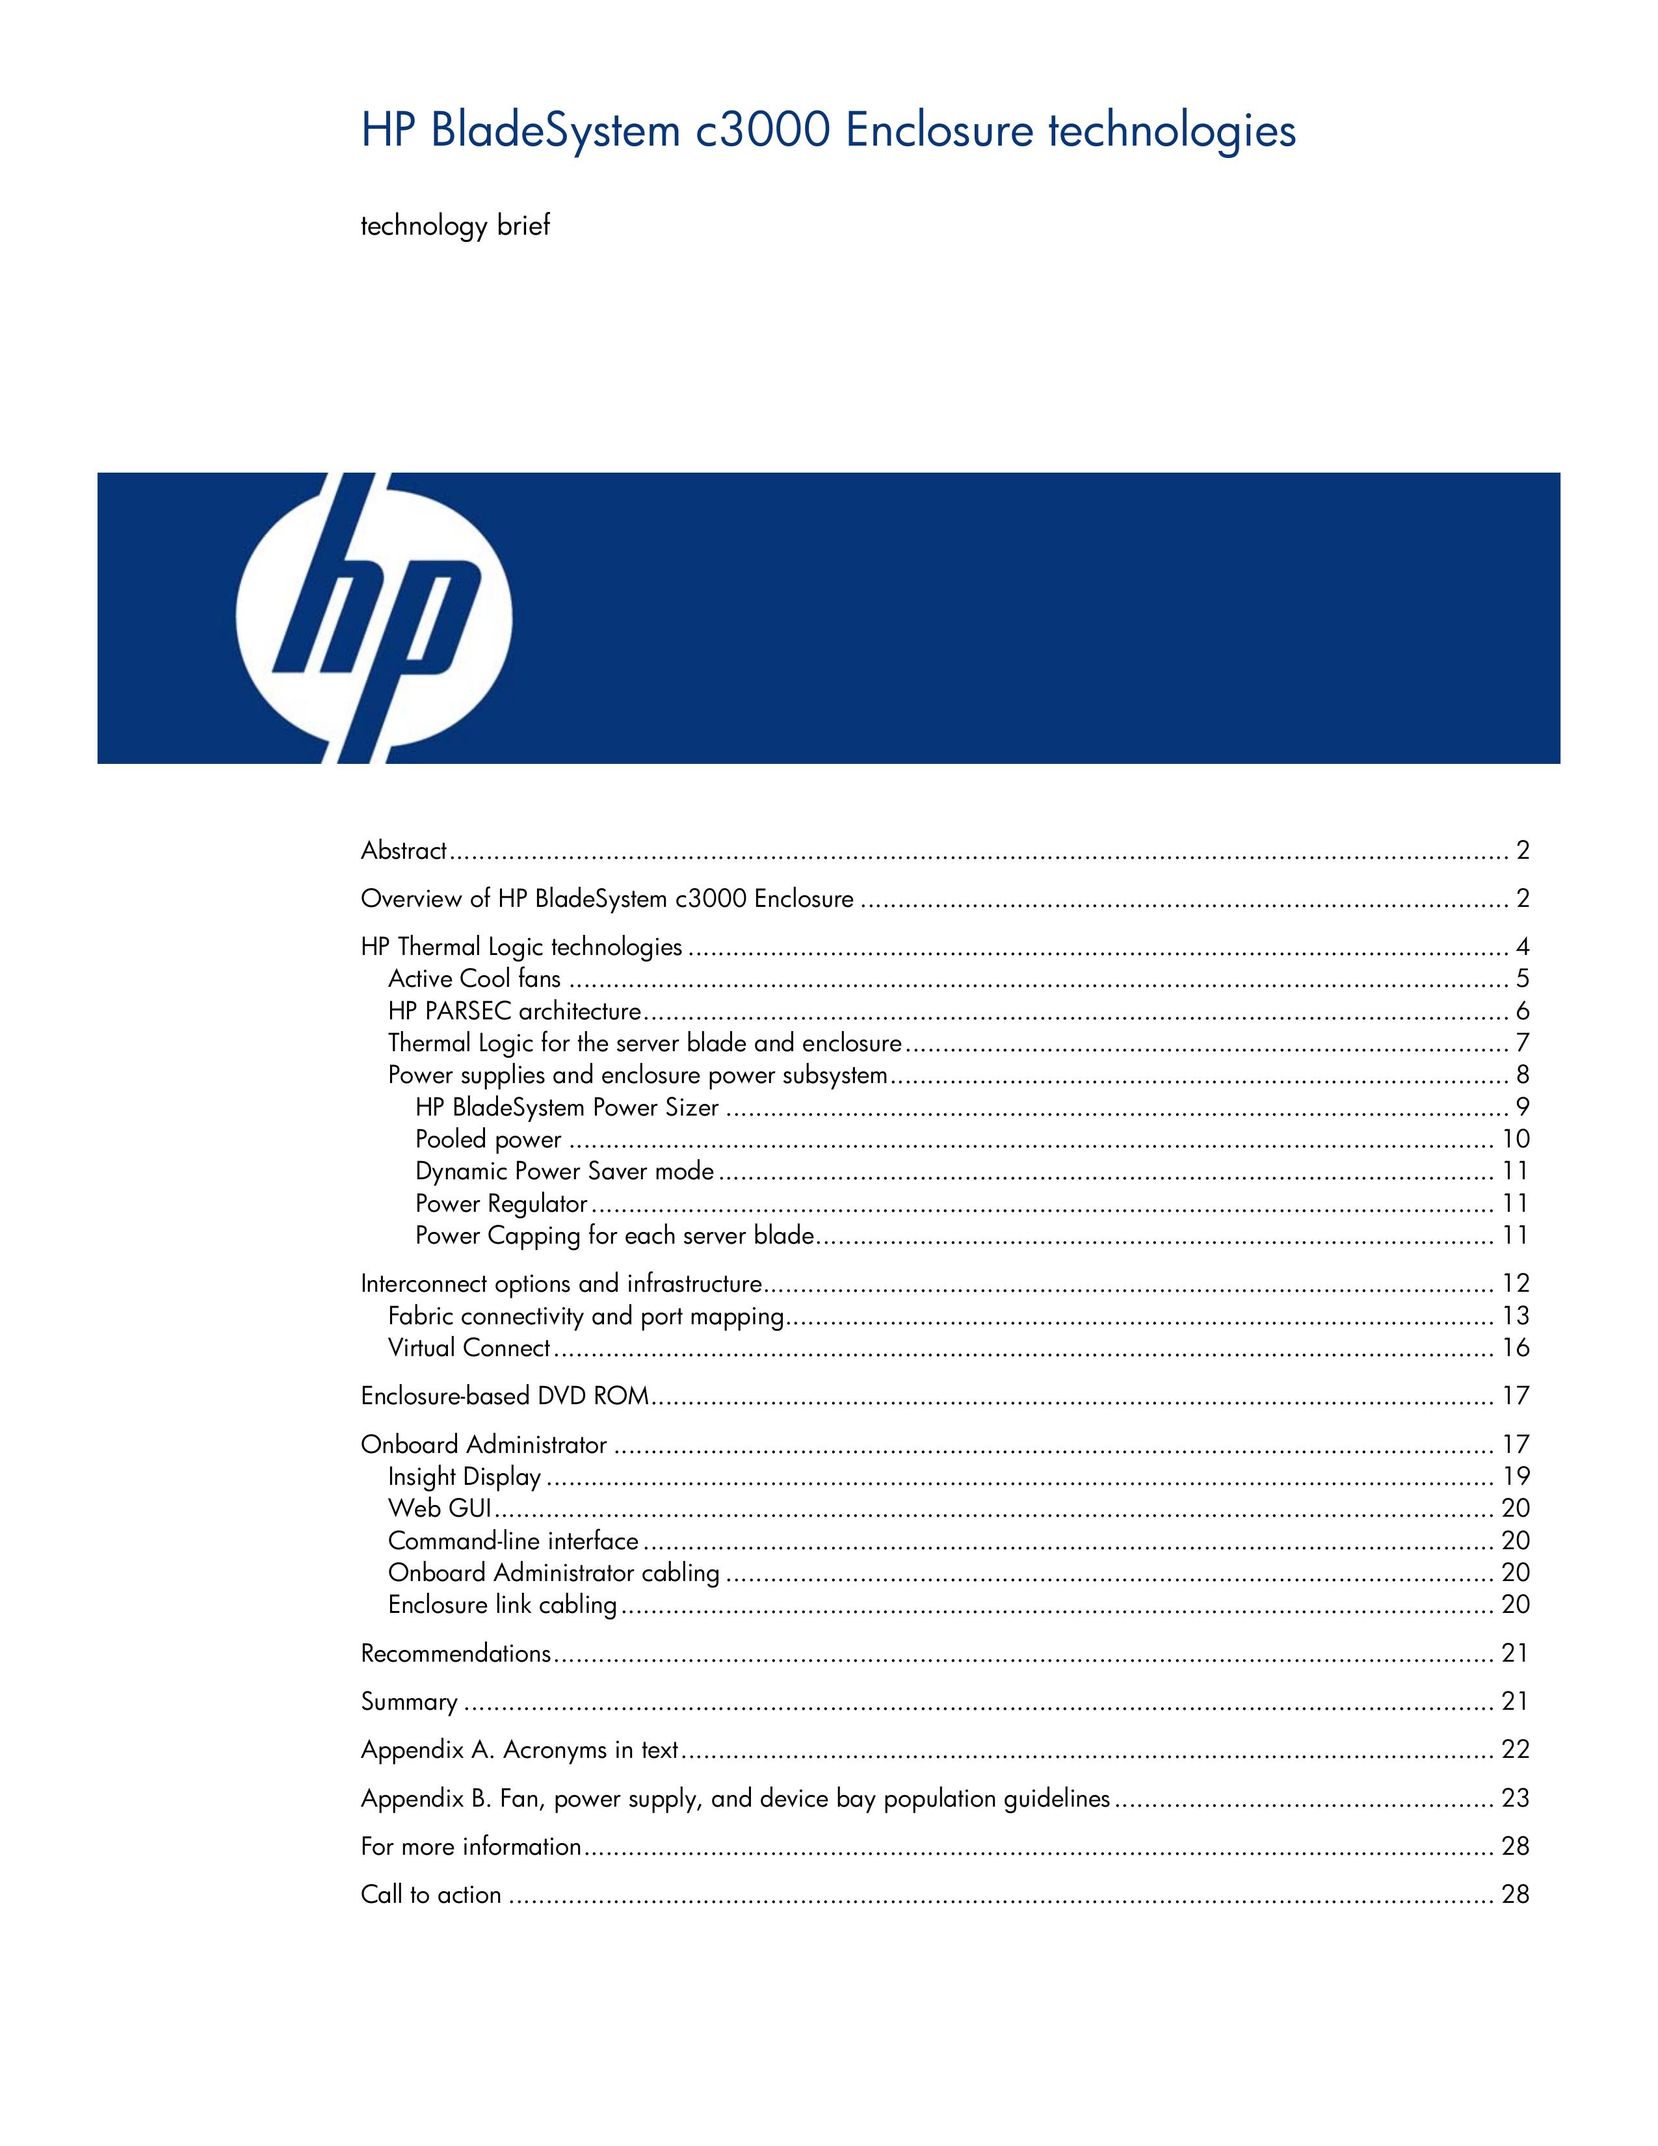 HP (Hewlett-Packard) HP BladeSystem Enclosure technologies Computer Hardware User Manual